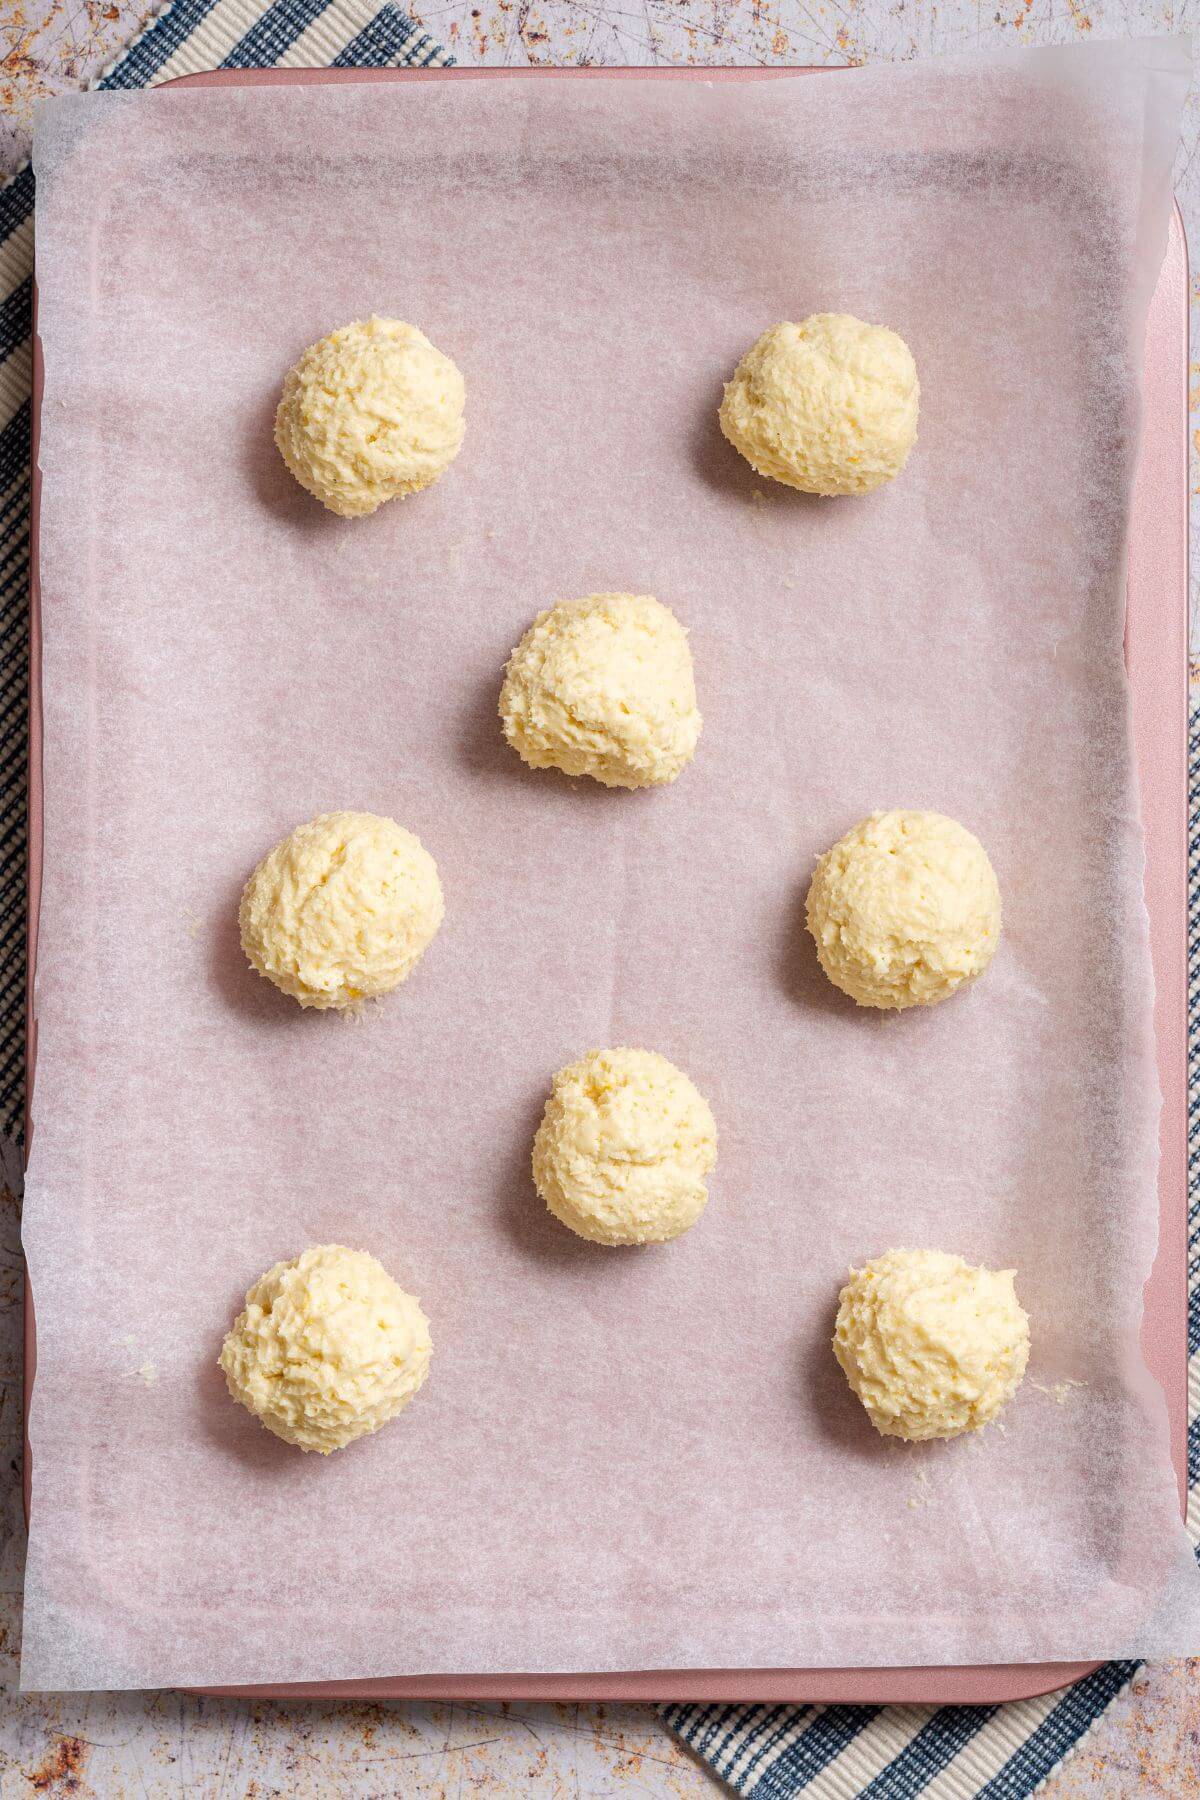 Cookie dough balls on lined baking sheet.